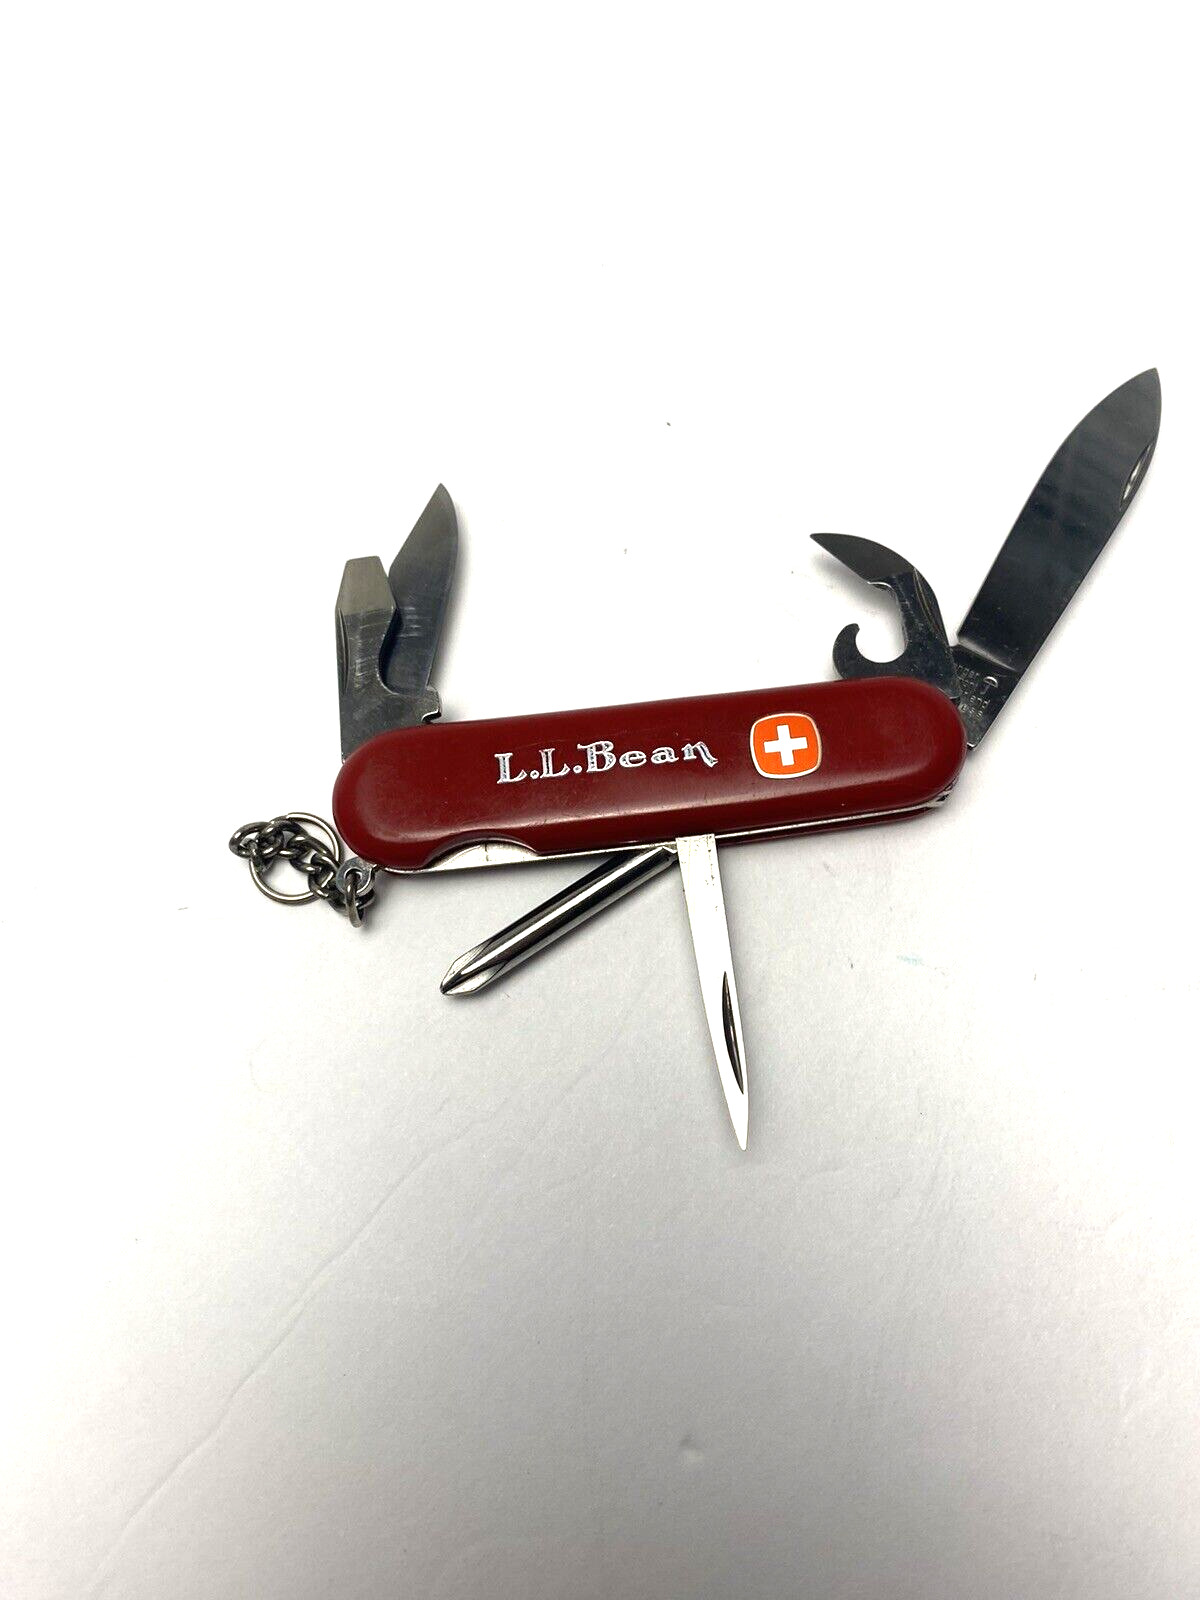 LL Bean Wenger Delemont Swiss Army knife. 6 blade